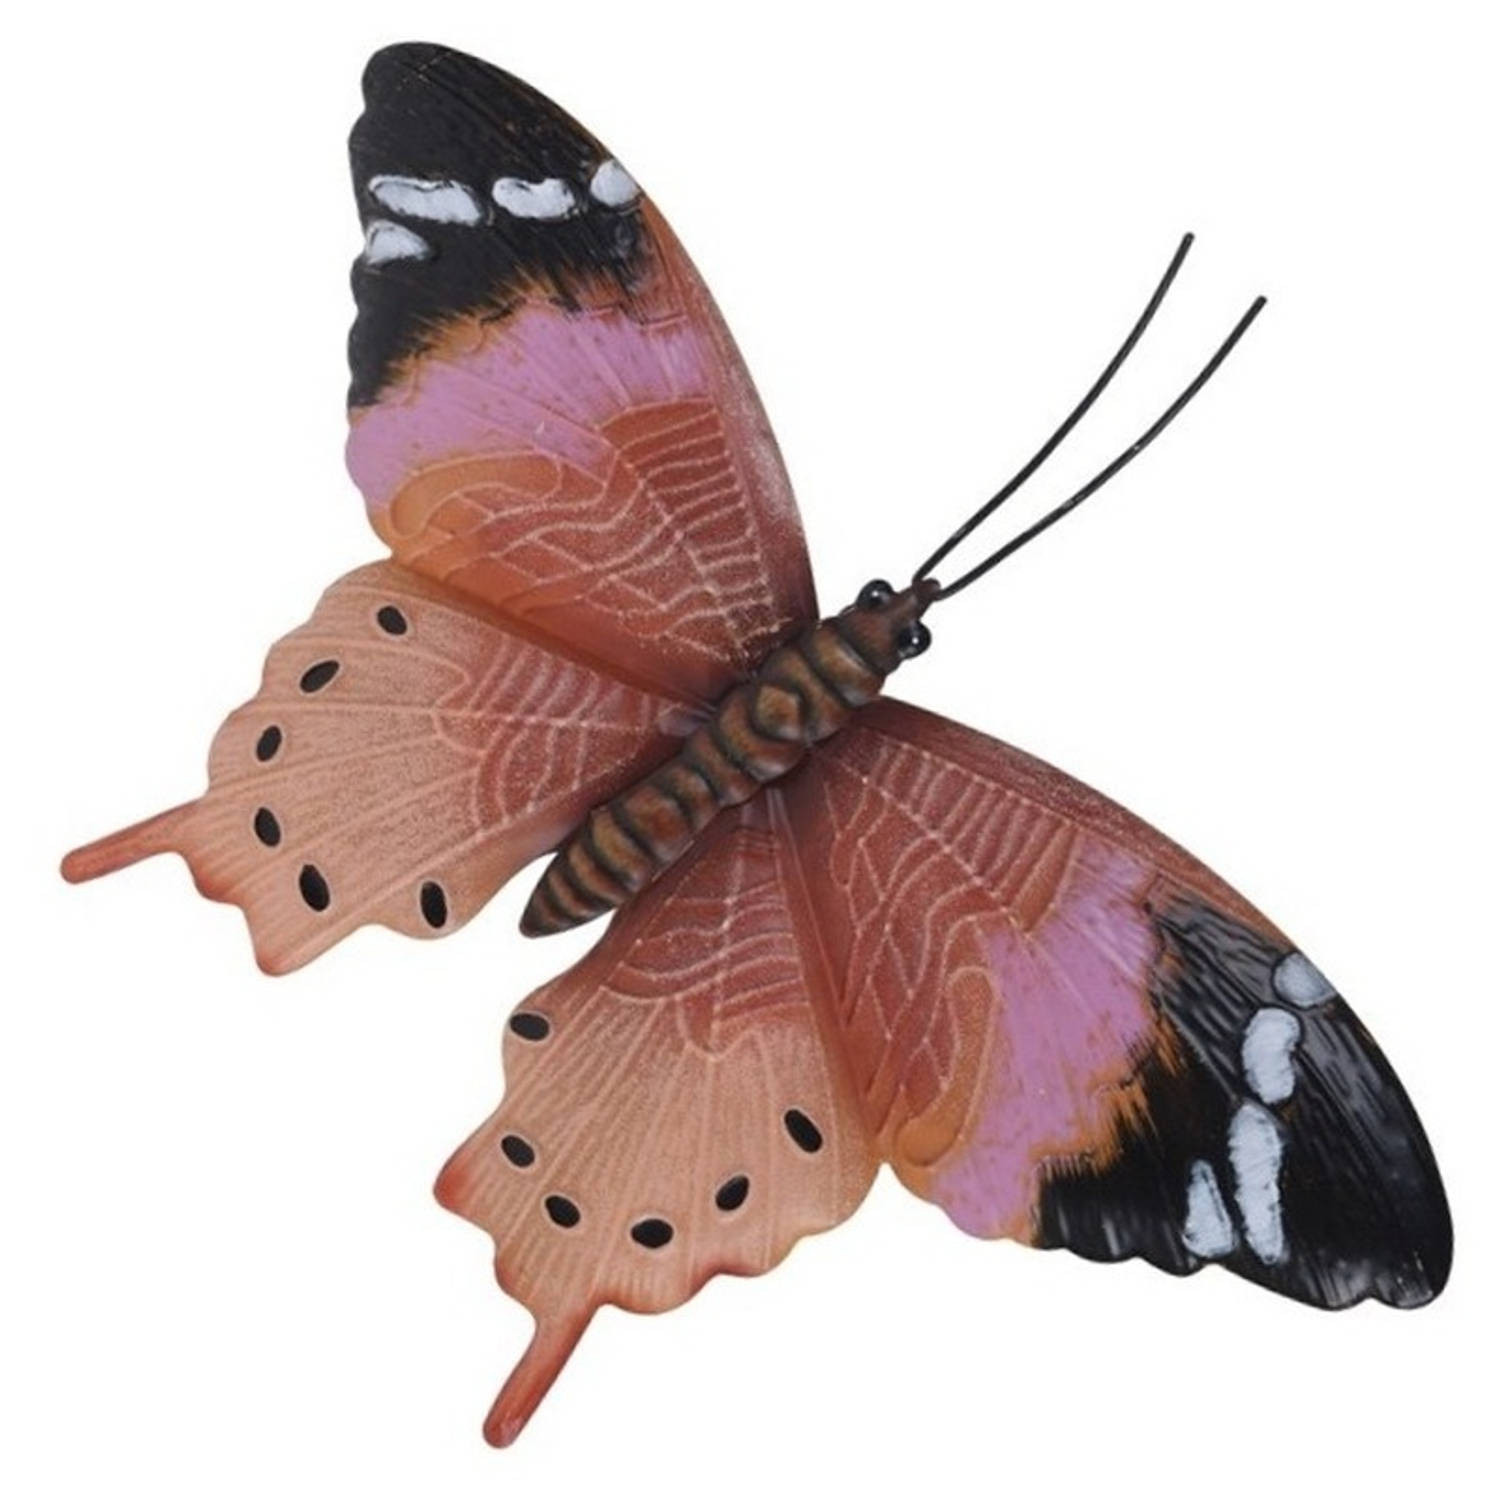 Tuindecoratie roestbruin/roze vlinder 35 cm - Tuinbeelden